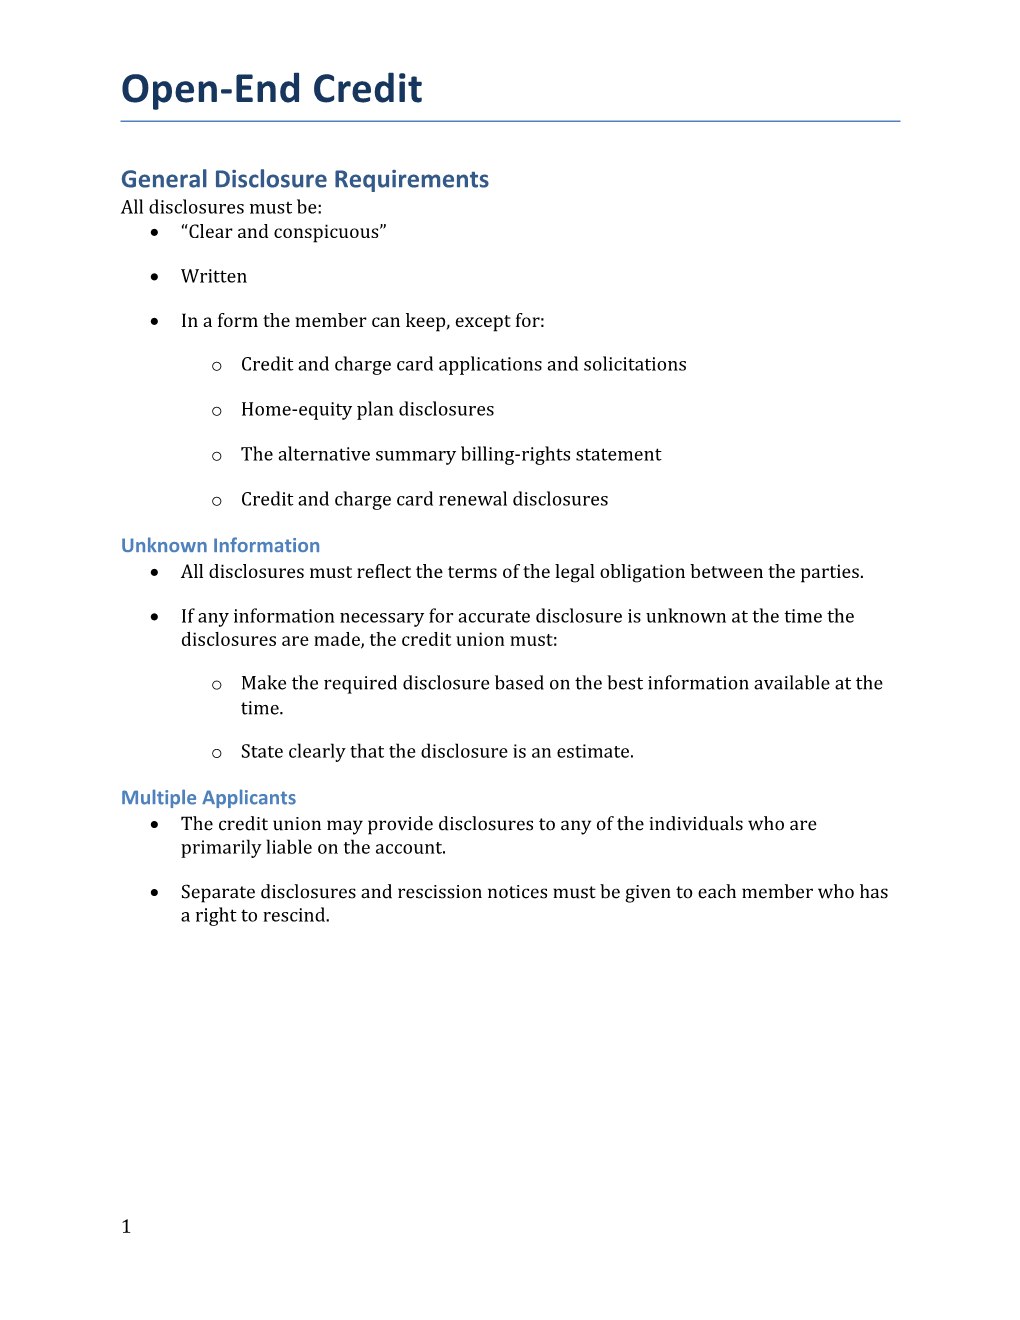 General Disclosure Requirements